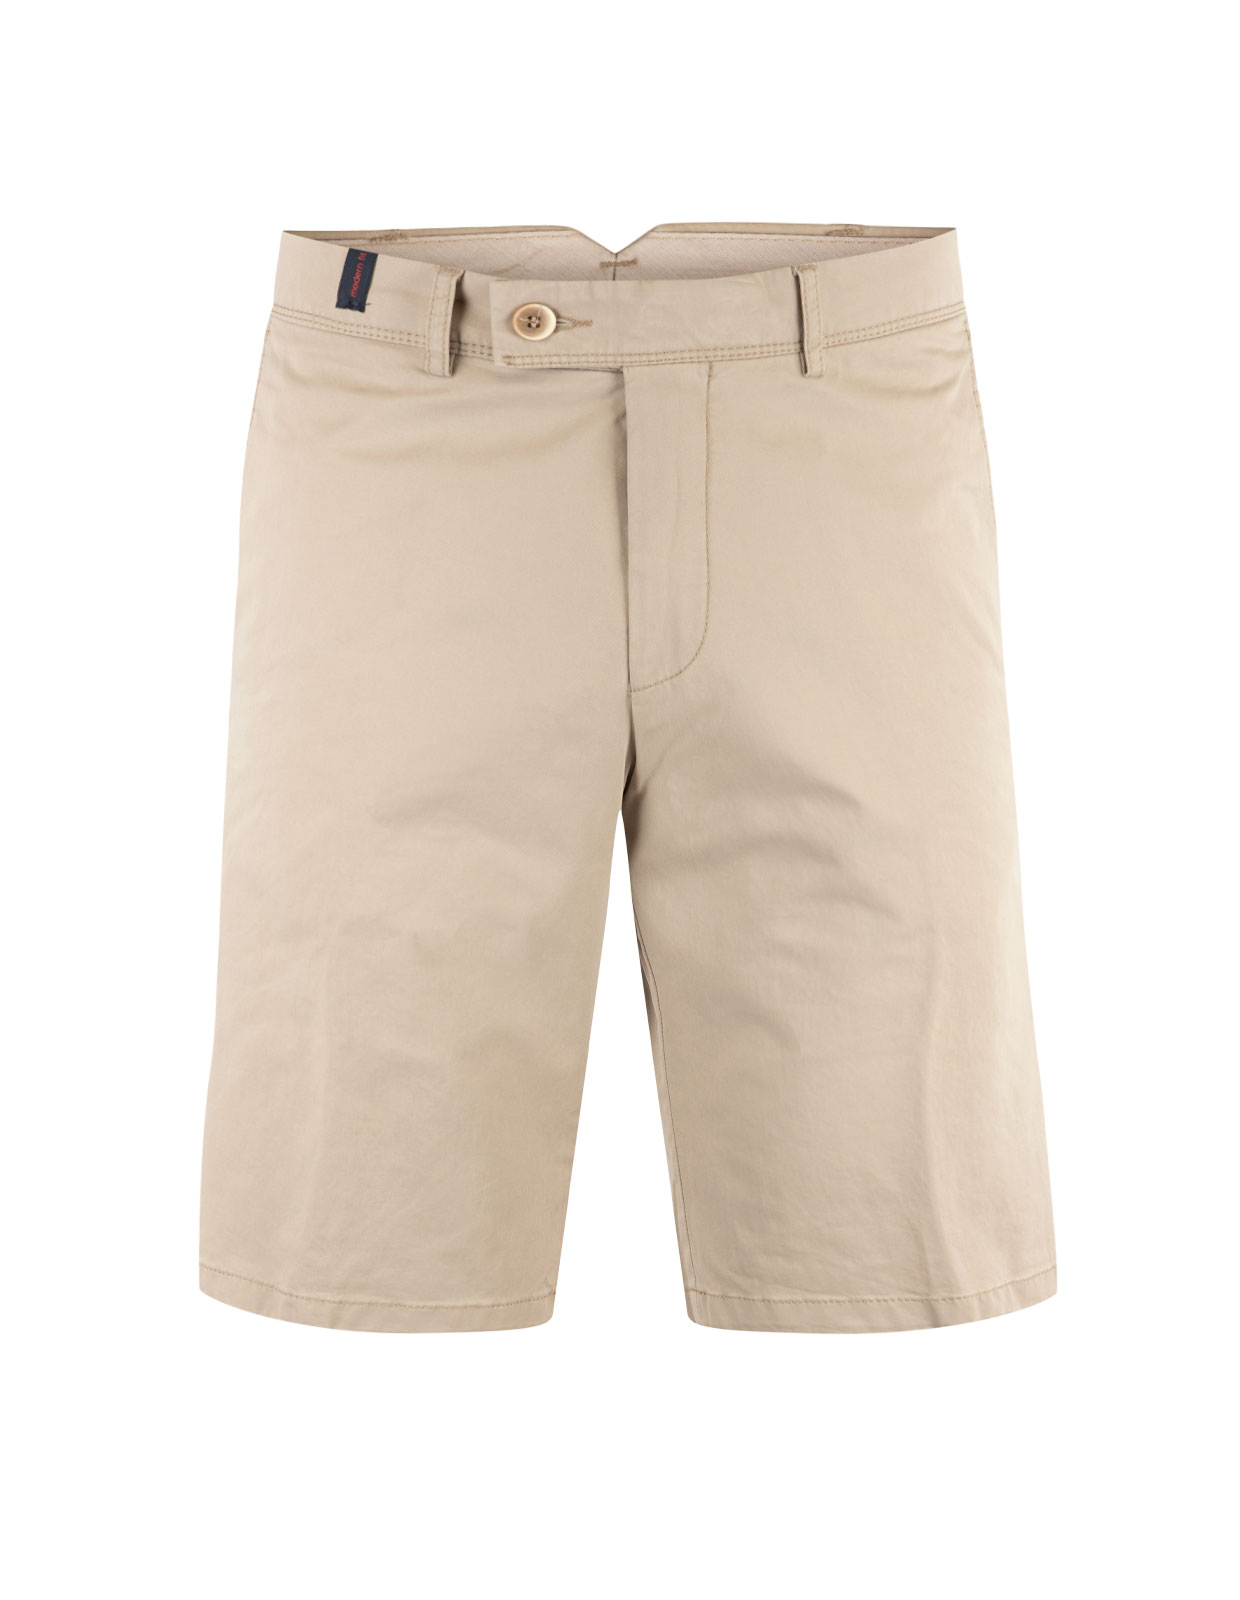 Shorts Regular Fit Cotton Stretch Sand Beige